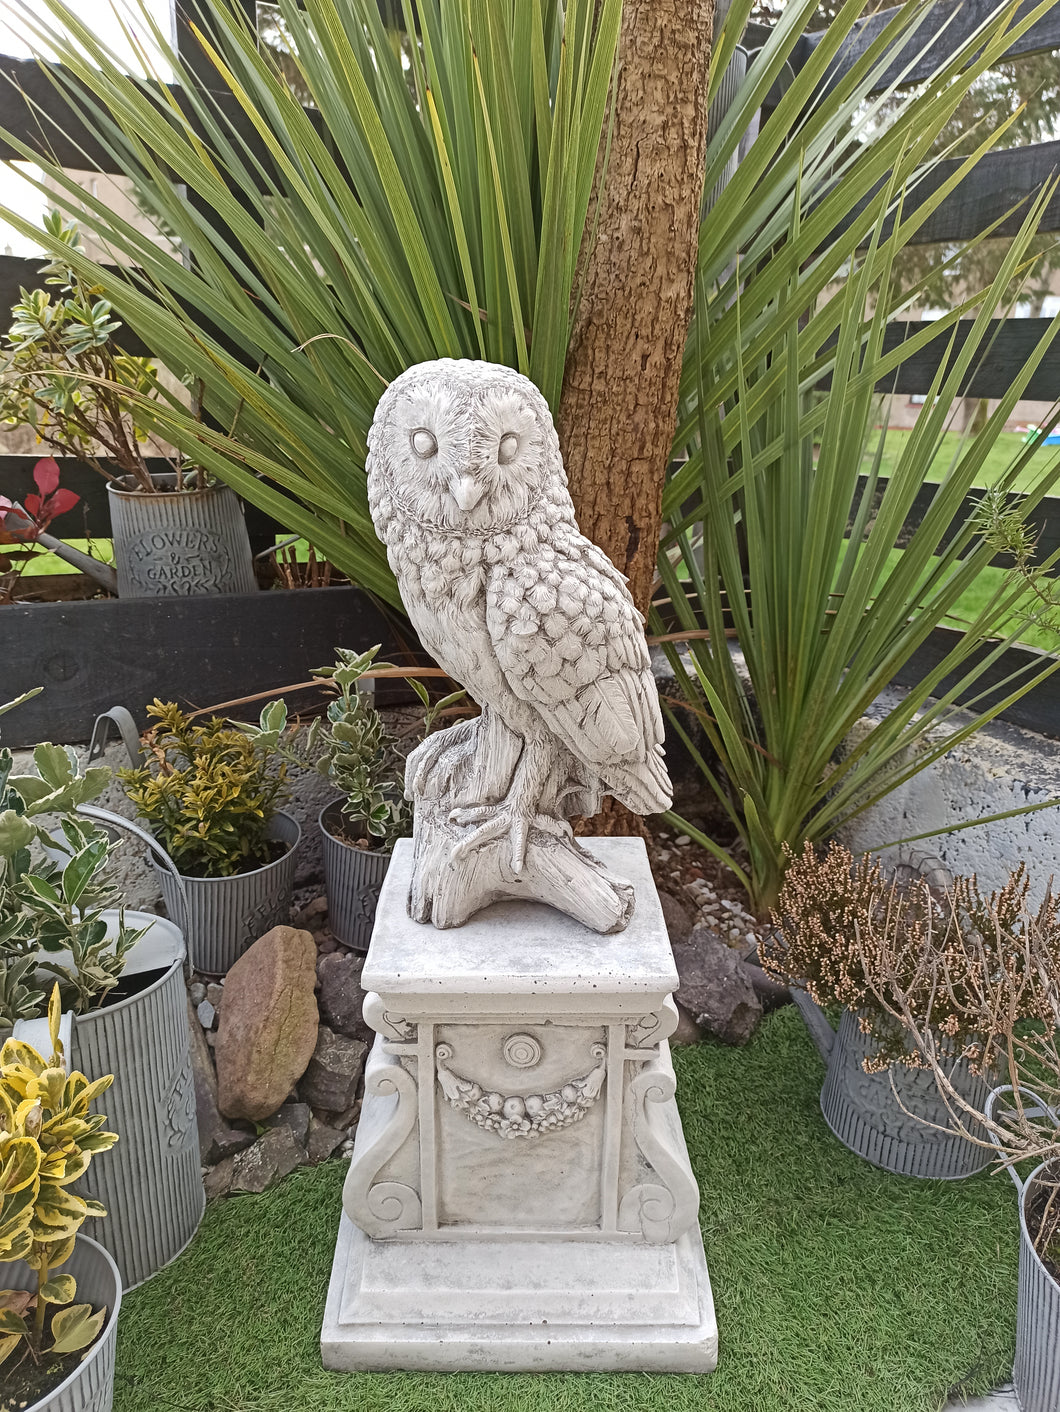 AGED STONE GARDEN SQUARE PLINTH PEDESTAL AND Owl Statue Garden Ornament Set